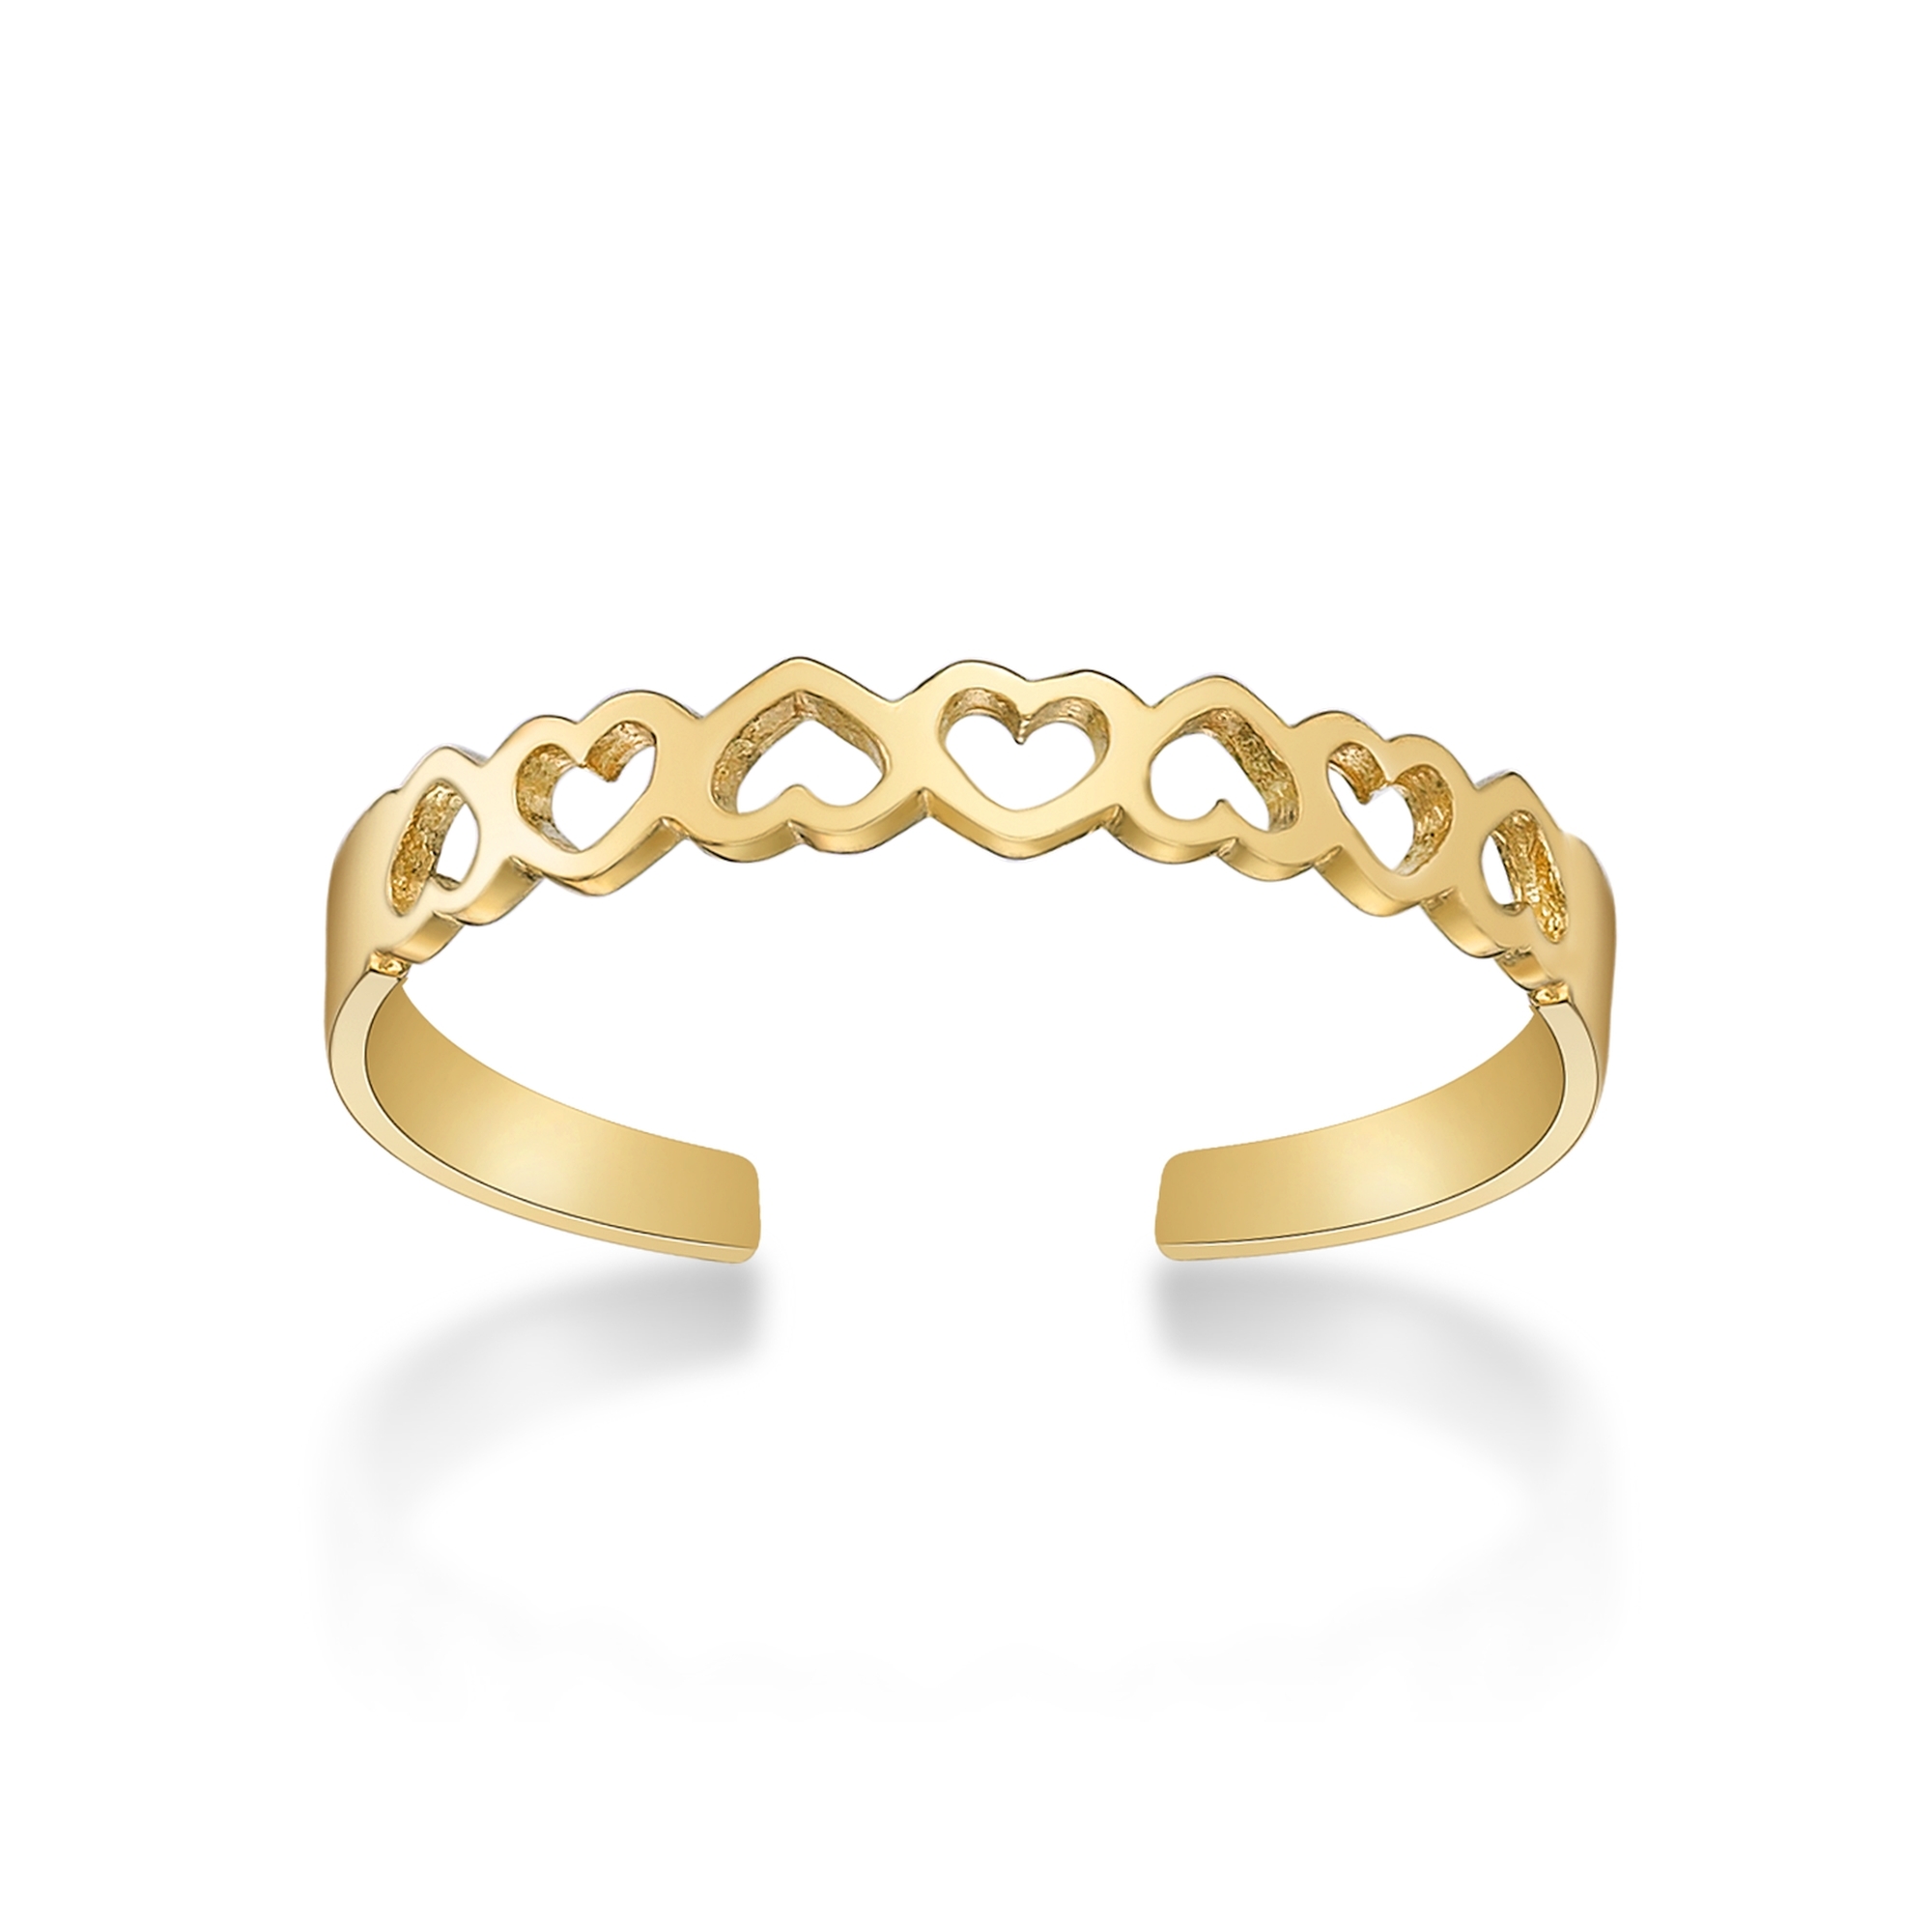 Lavari Jewelers Women's Heart Adjustable Toe Ring, 10K Yellow Gold, 3 MM Wide